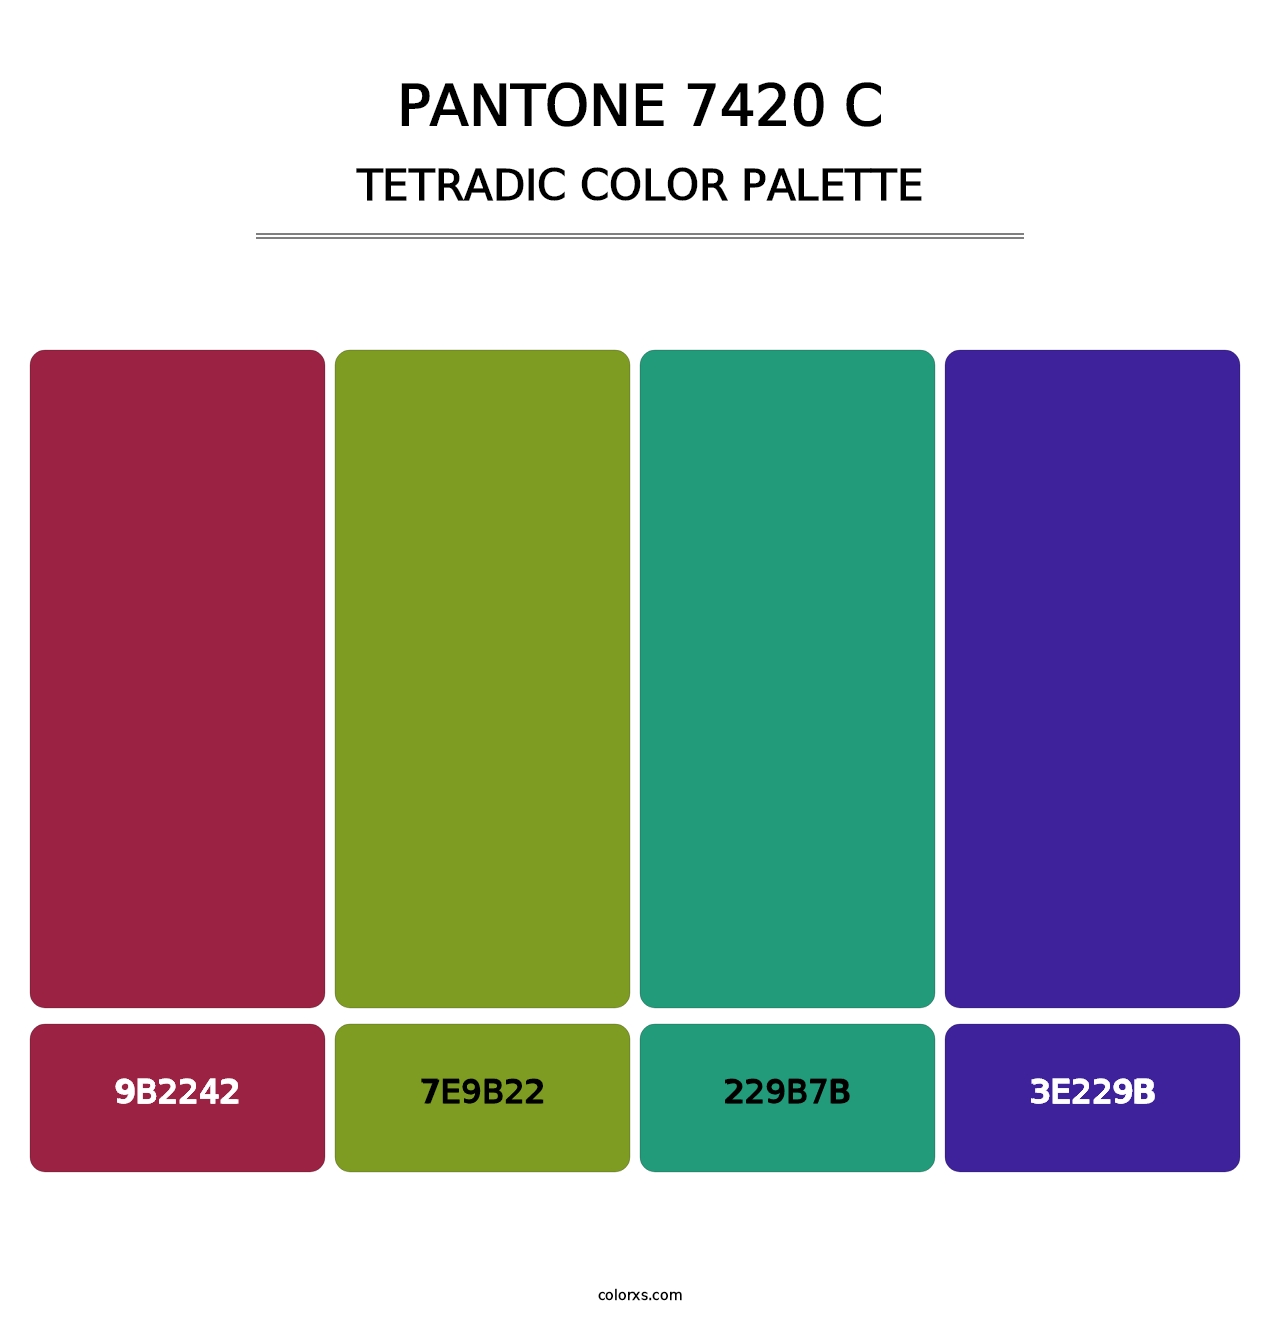 PANTONE 7420 C - Tetradic Color Palette